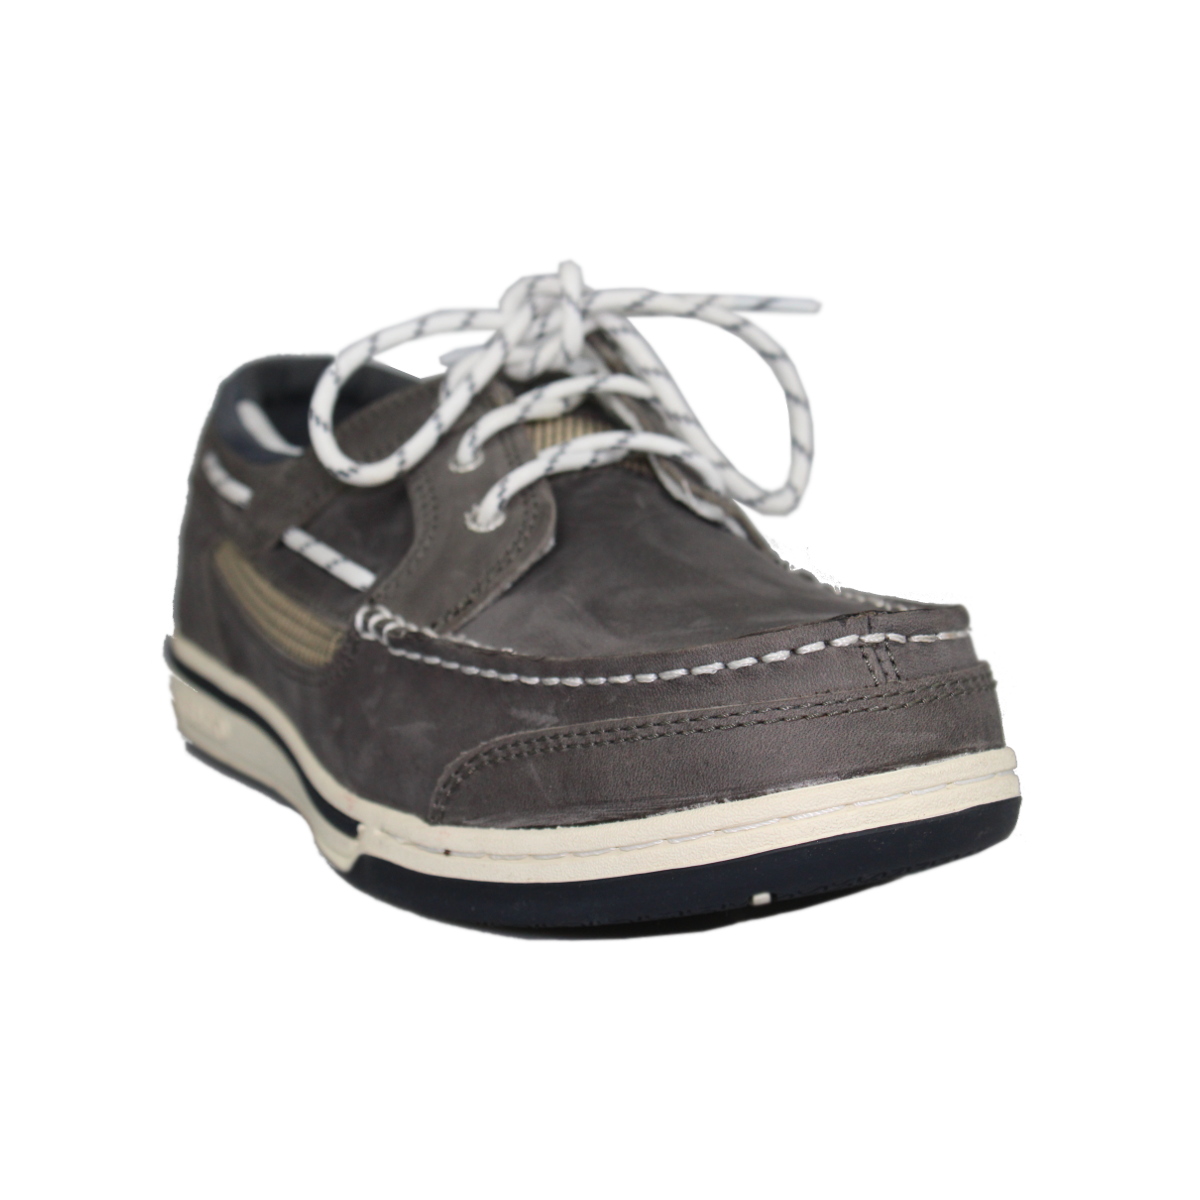 Sebago Triton Three-Eye chaussures bateau homme gris foncé-taupe, taille 44